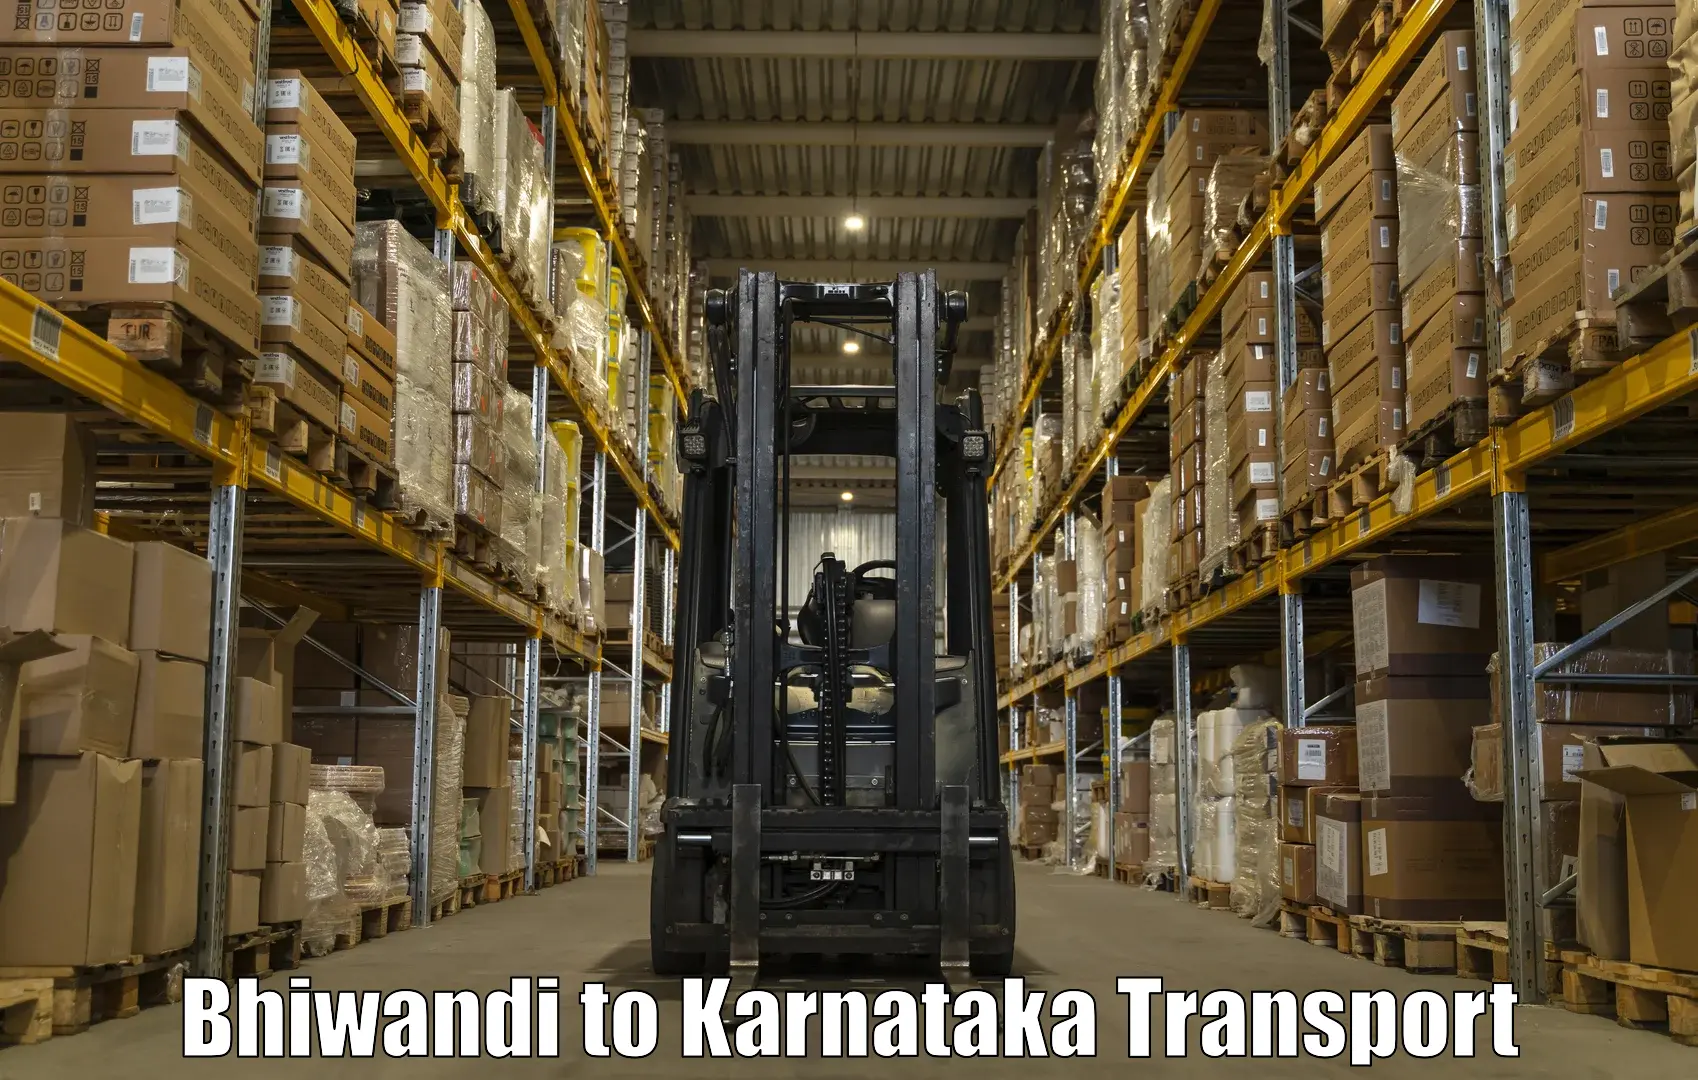 Truck transport companies in India Bhiwandi to Kollegal